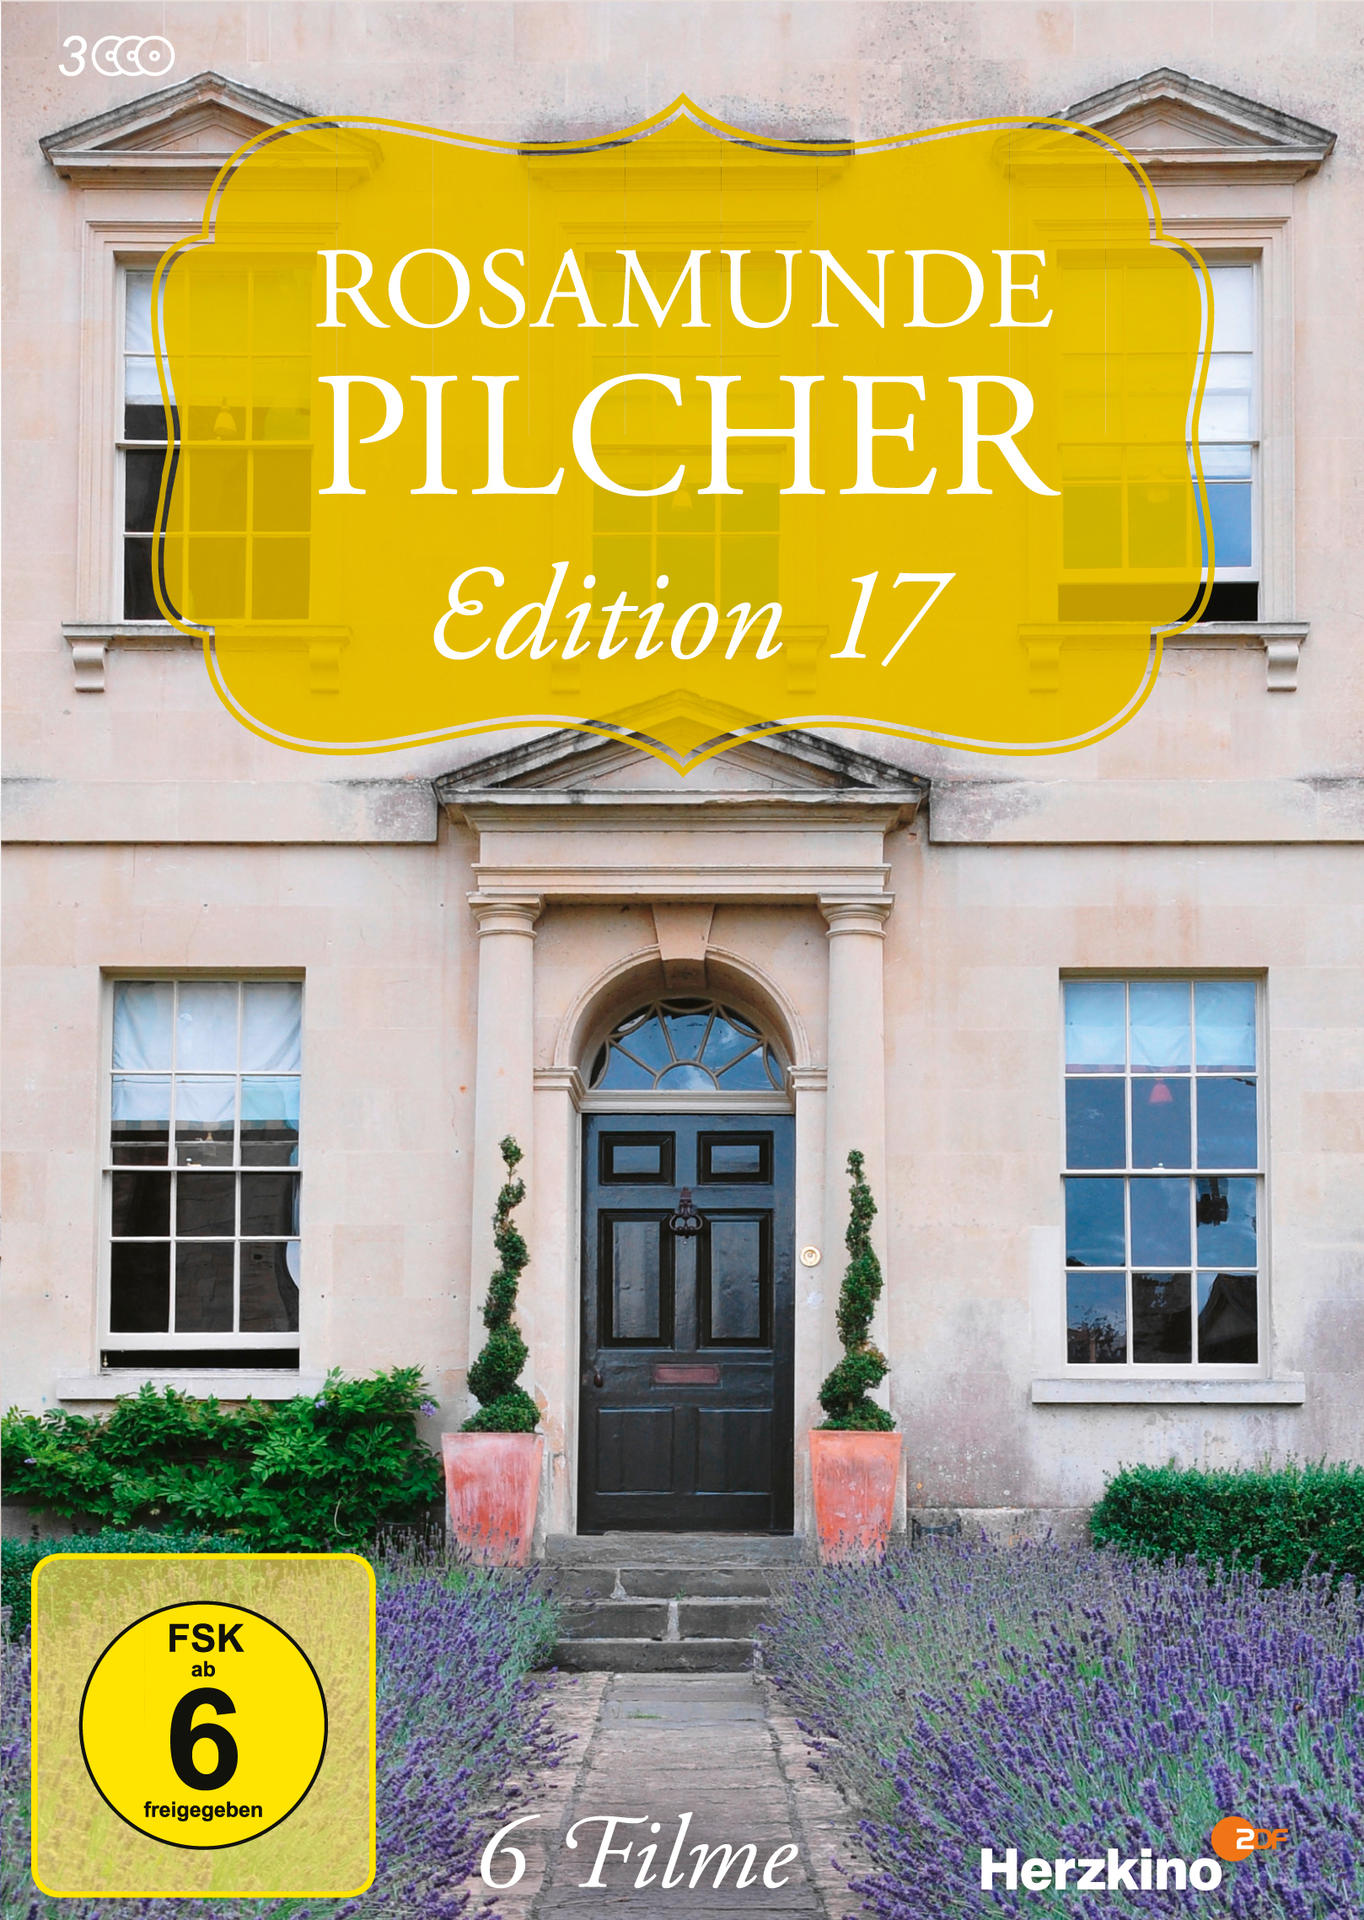 Rosamunde Pilcher Edition 17 DVD